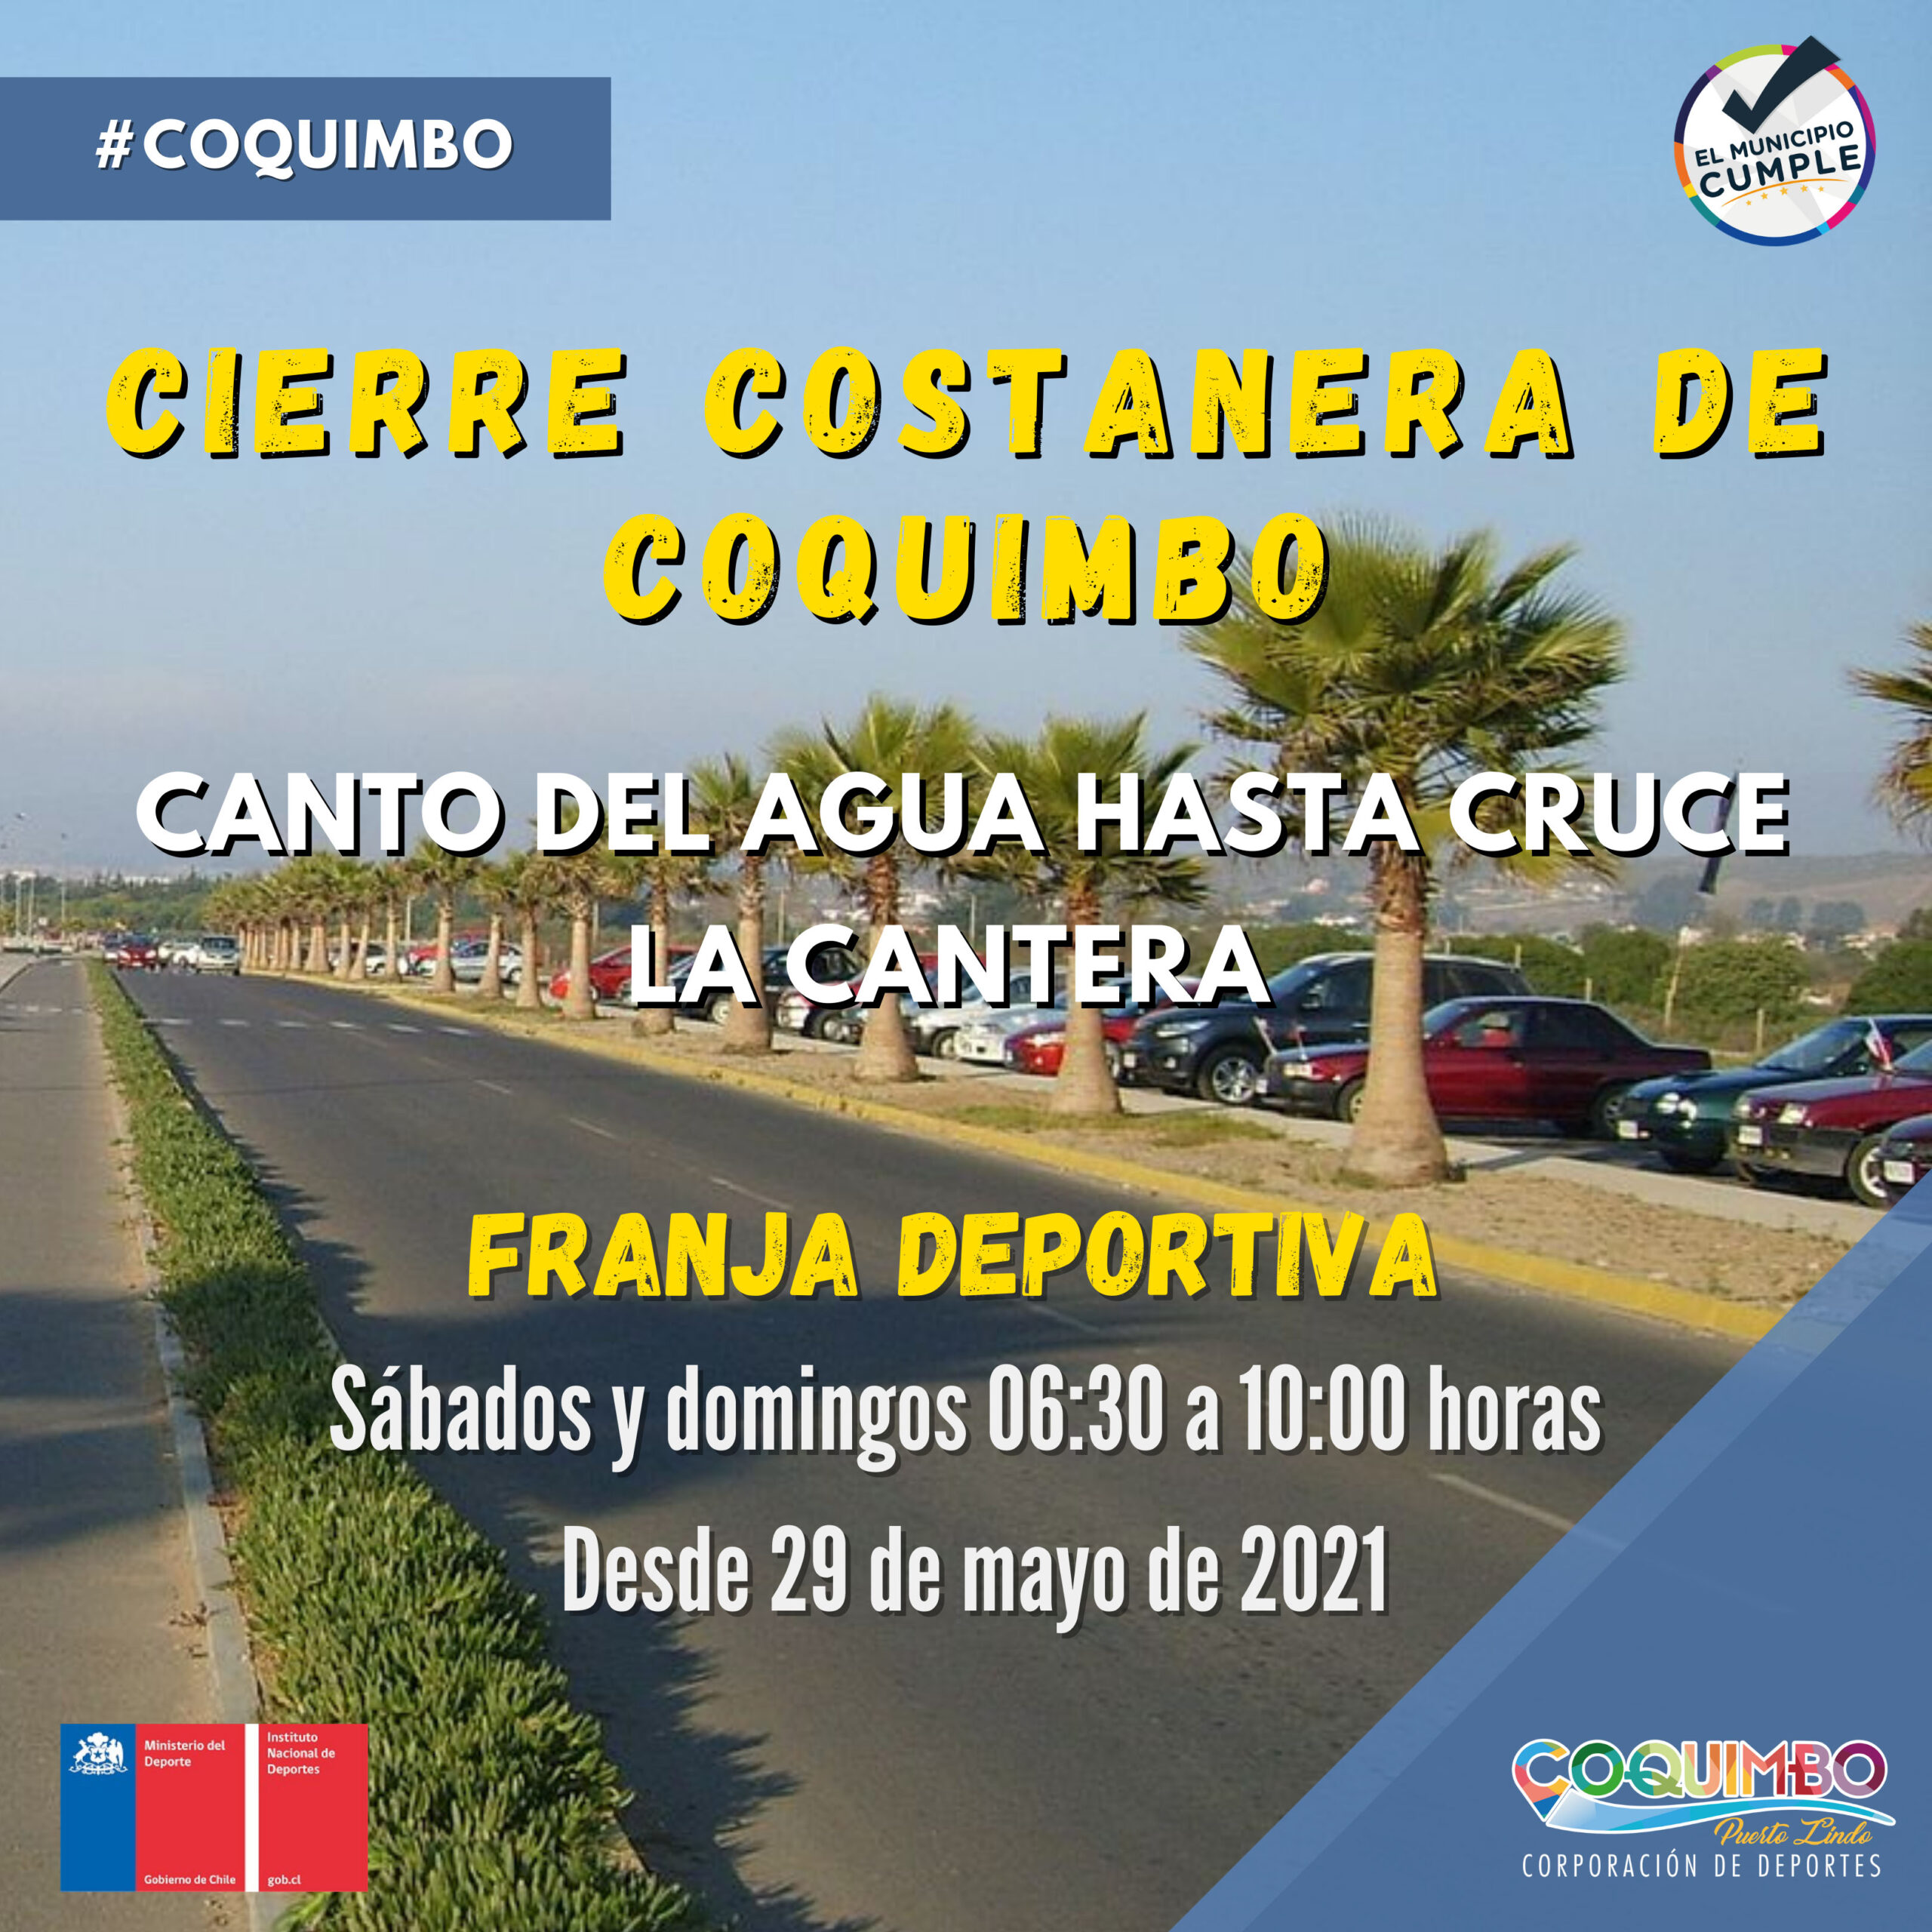 La Costanera de Coquimbo se suma a la franja deportiva “Elige Vivir Sano”